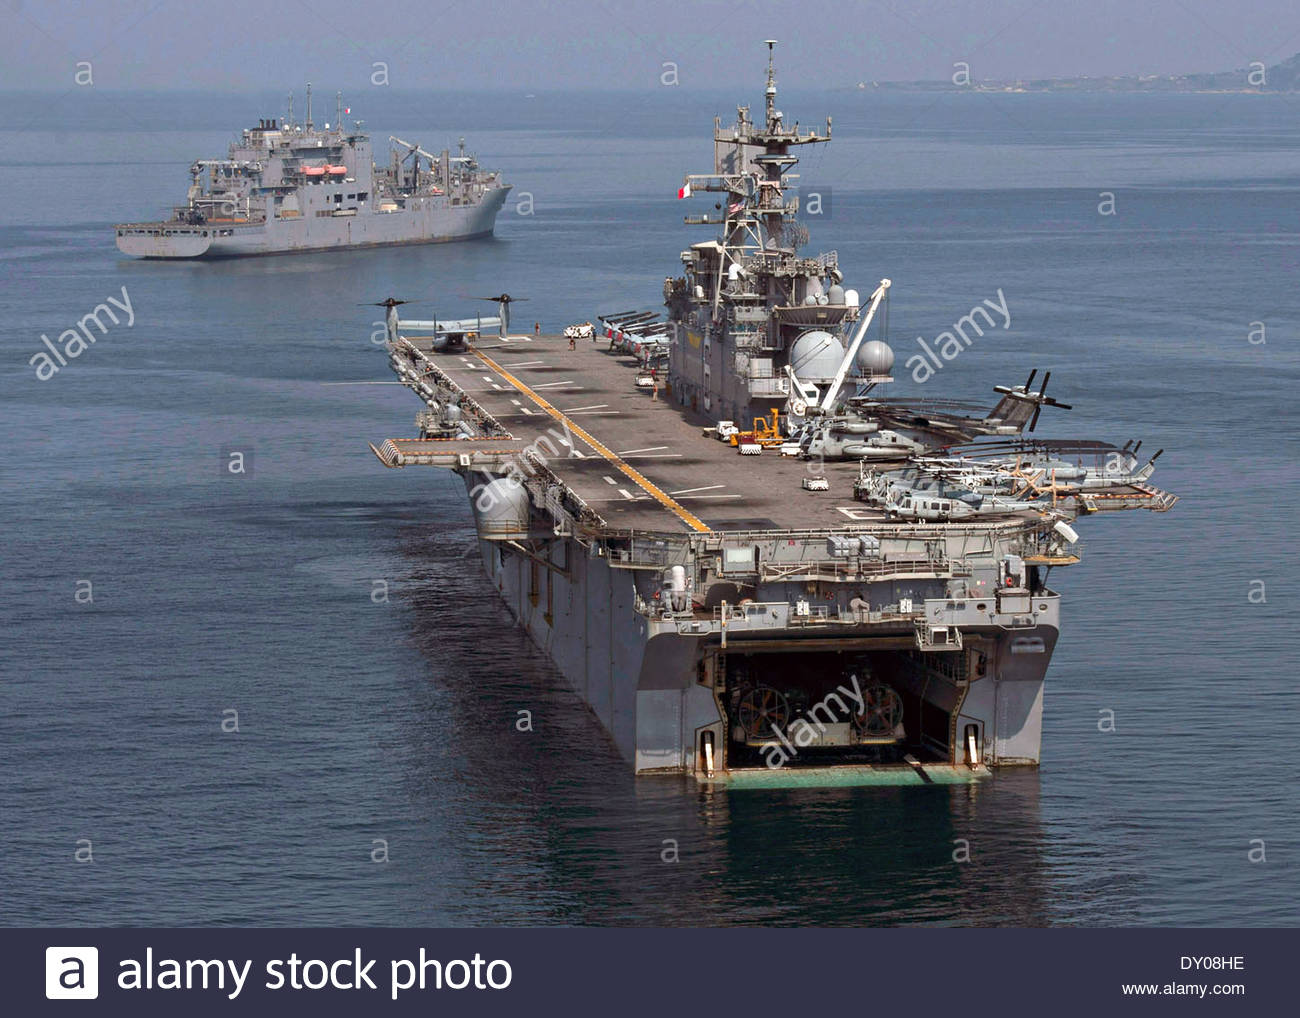 us-navy-amphibious-assault-ship-uss-bonhomme-richard-sits-at-anchorage-DY08HE.jpg